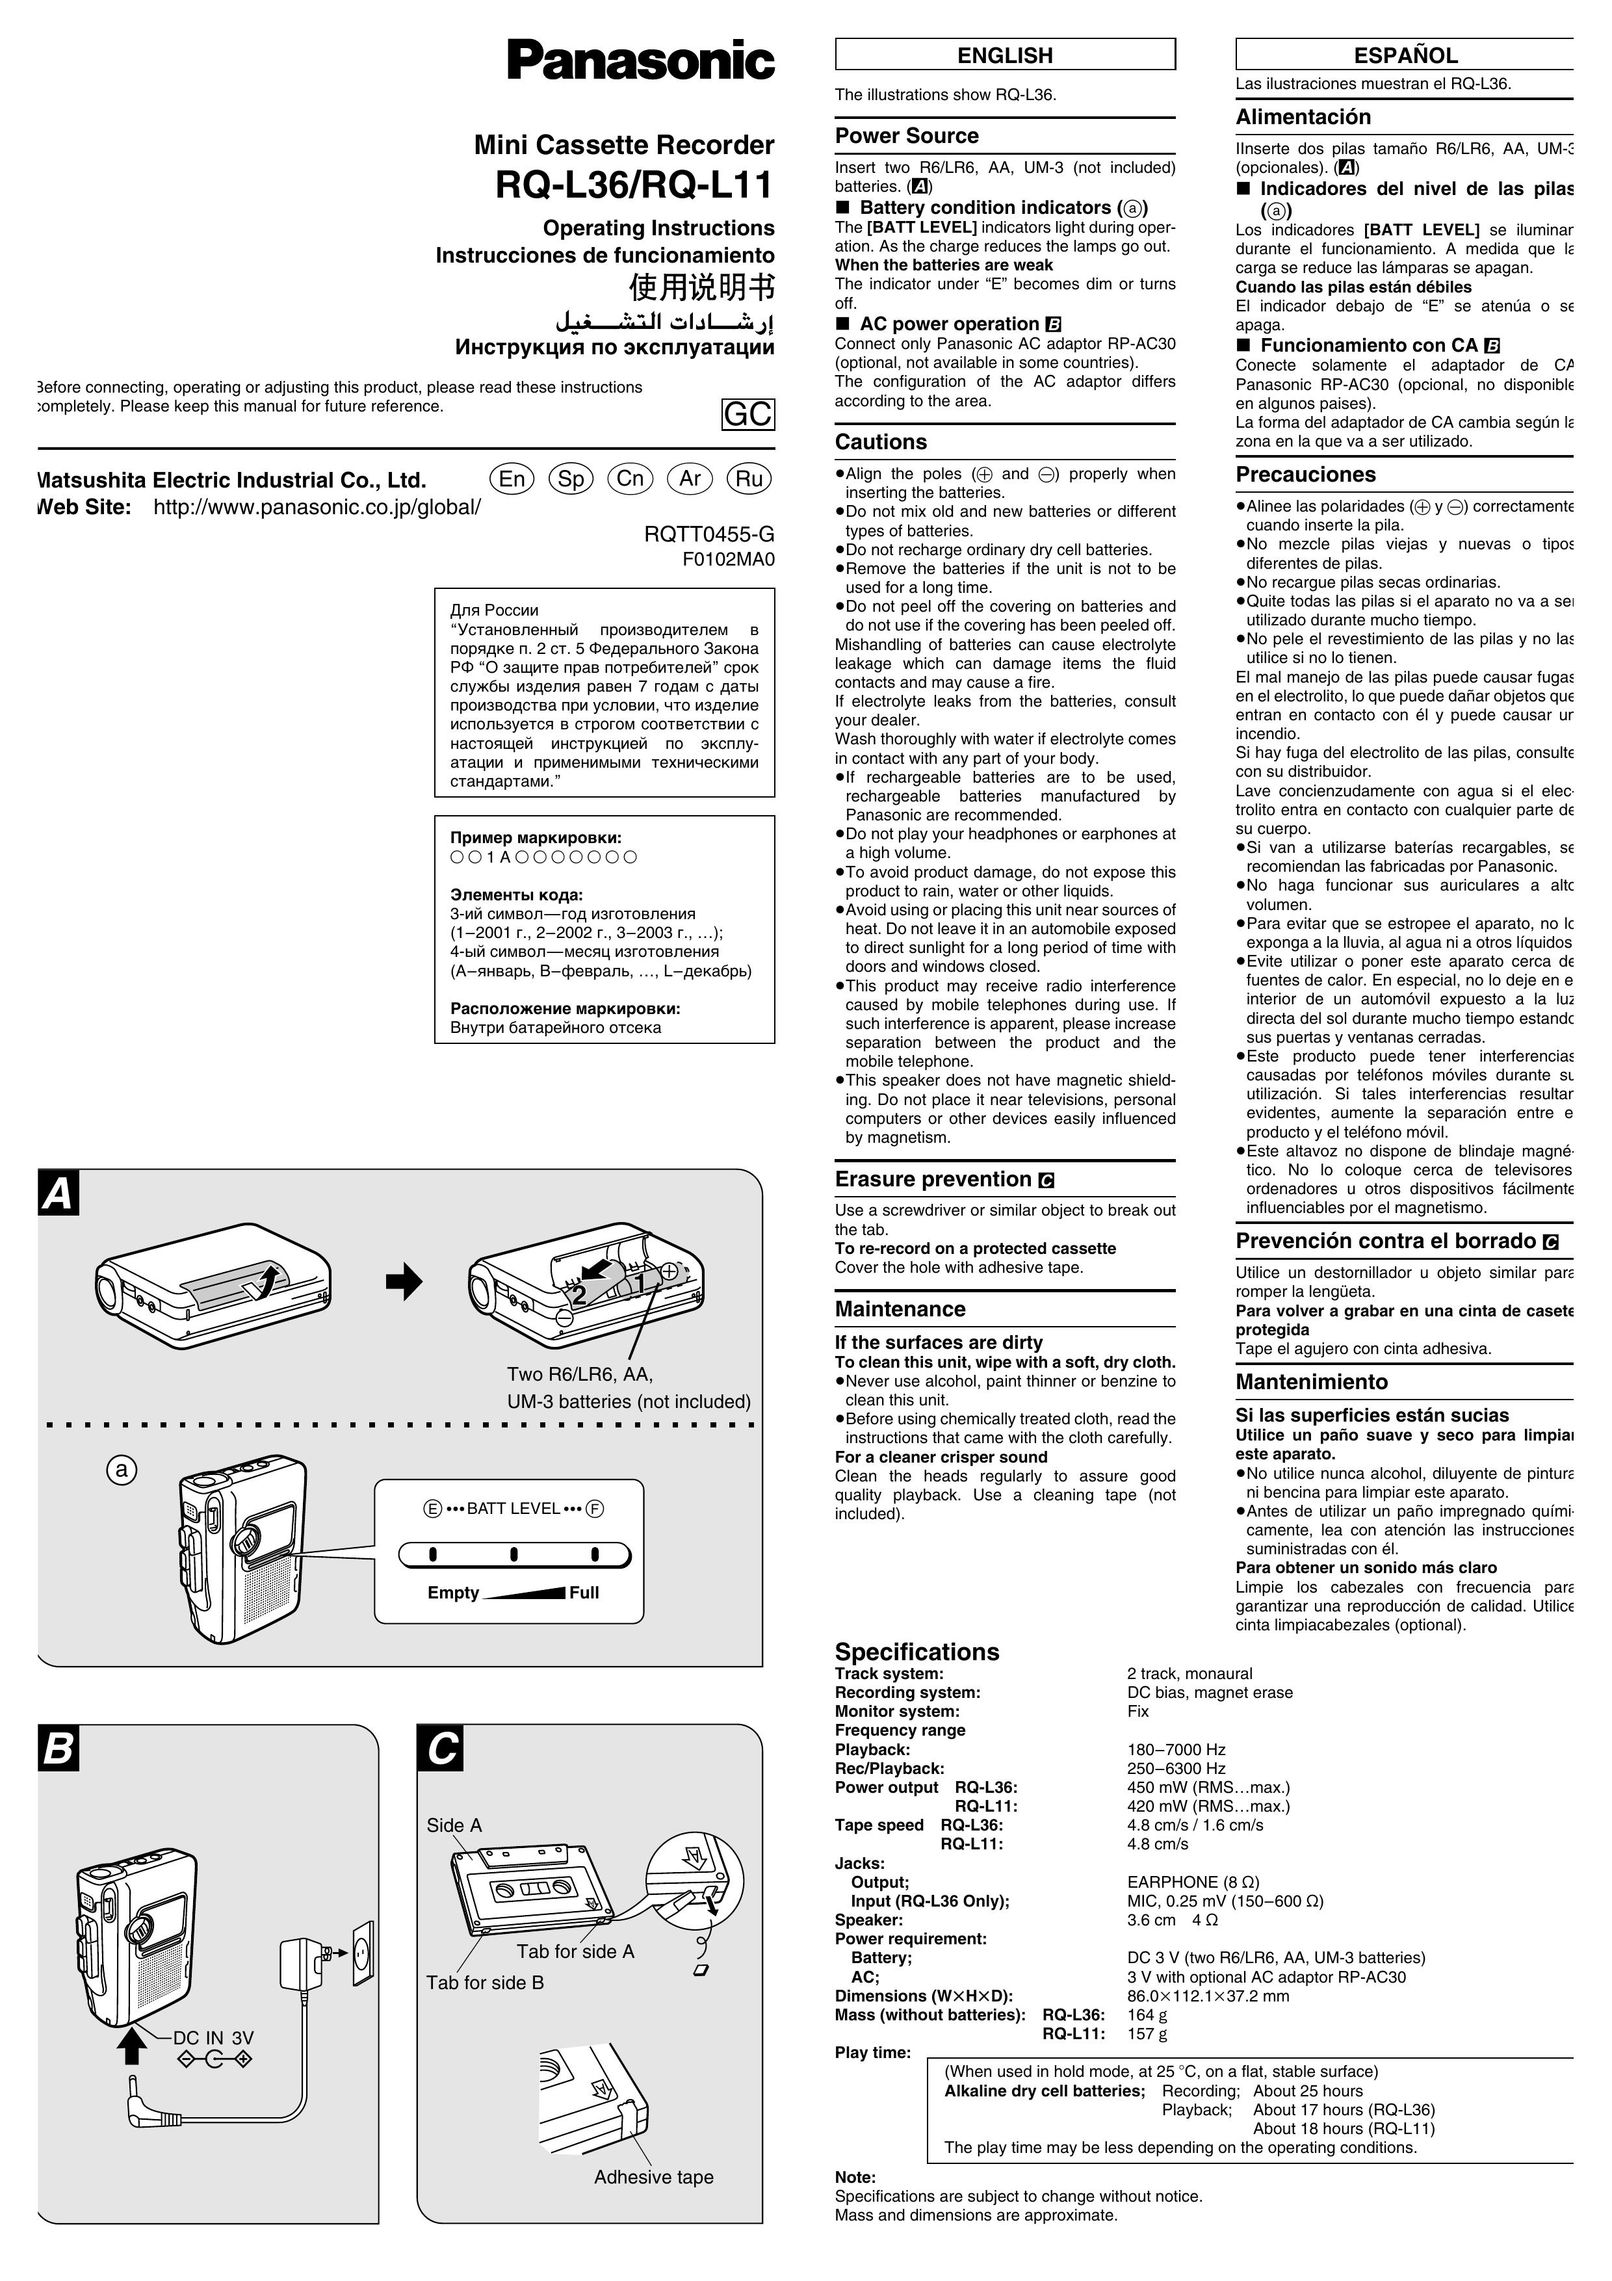 Panasonic RQ-L36 Microcassette Recorder User Manual